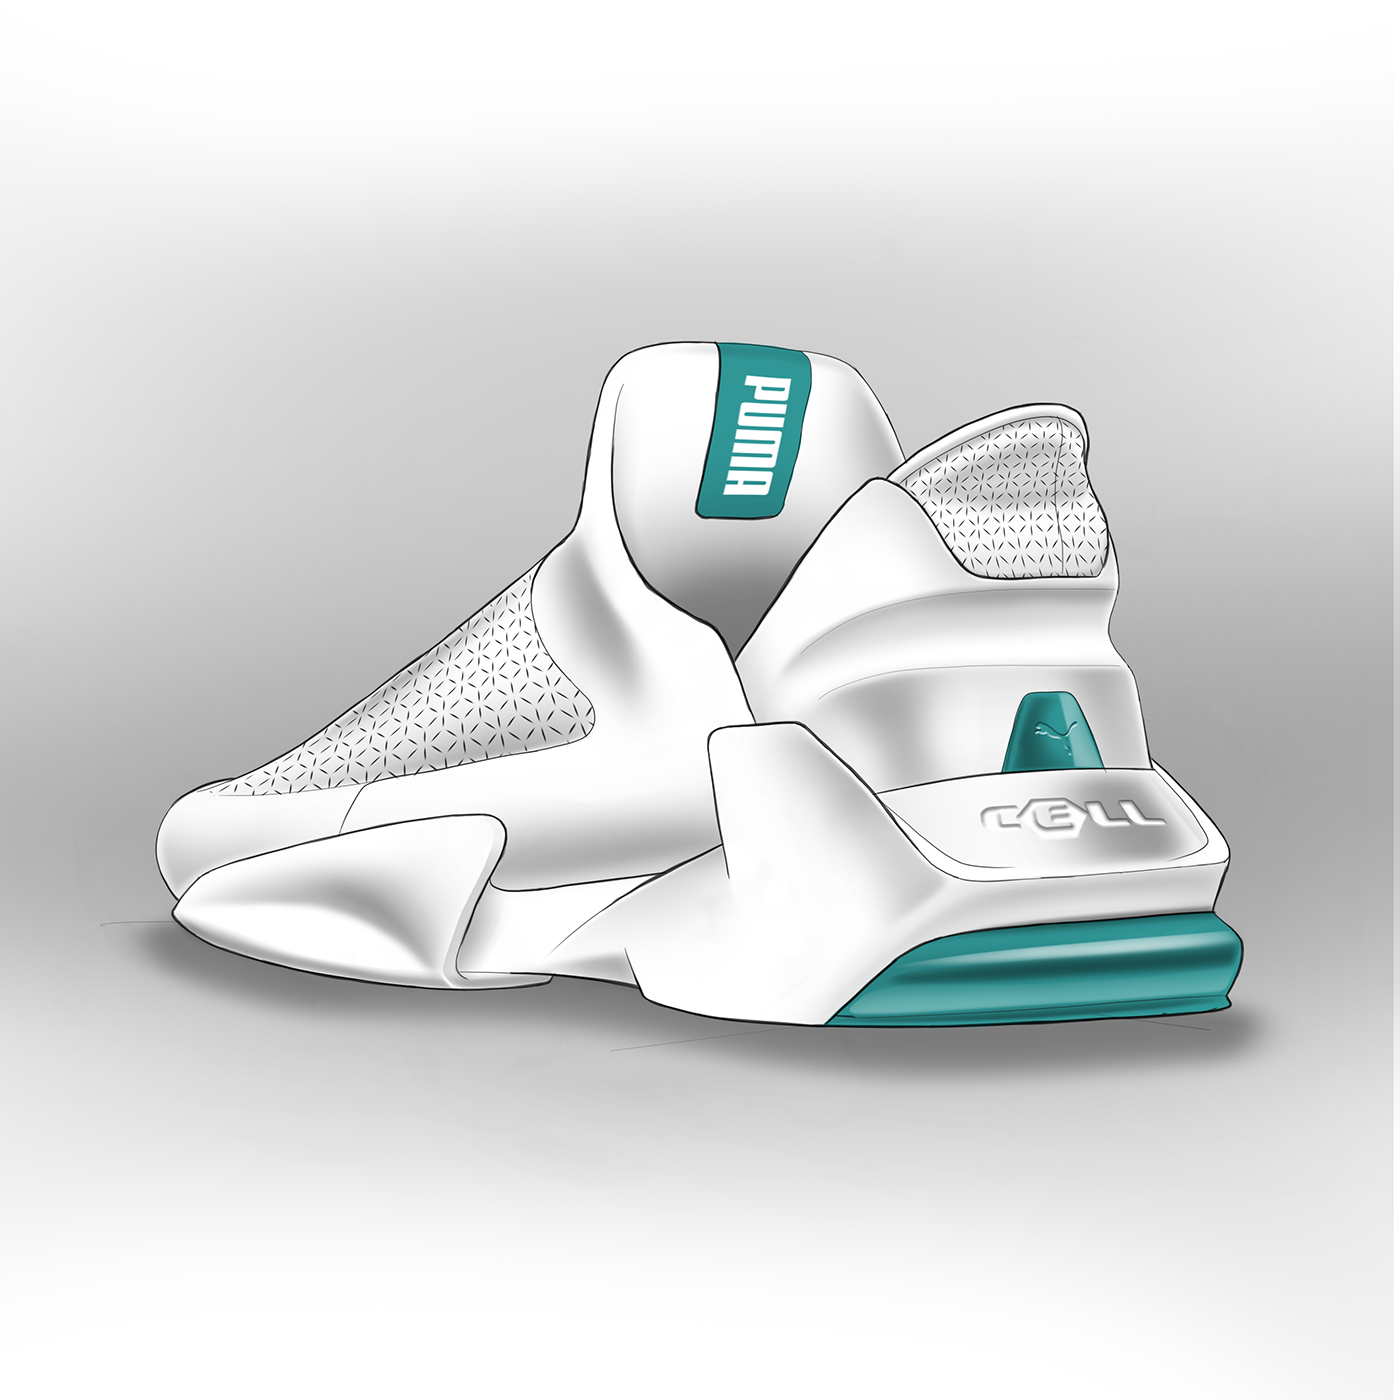 footwear design sketch rendering Fashion  photoshop sneakers adidas Nike puma